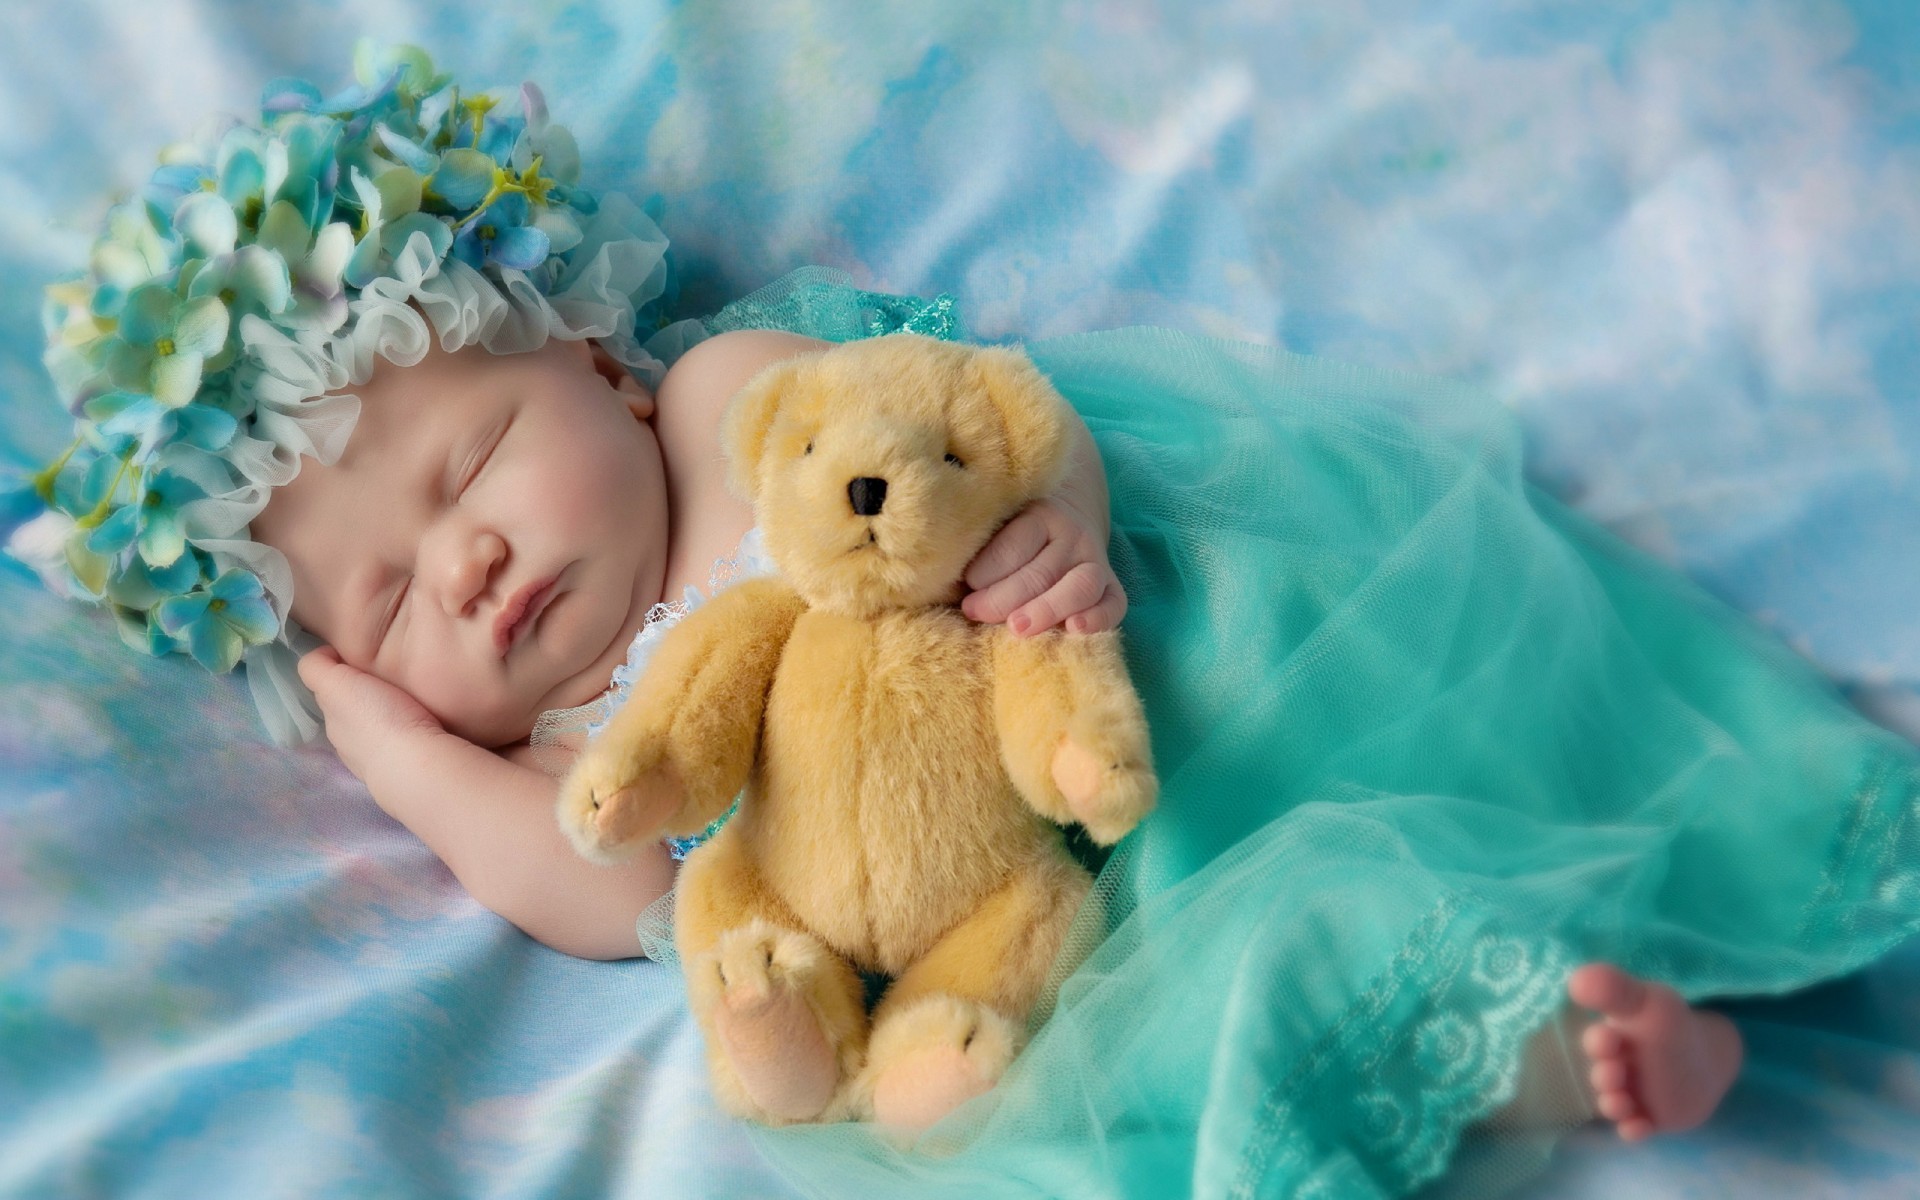 1920x1200 Cute / Cute baby Wallpaper. Cute baby, Sleeping, Teddy bear